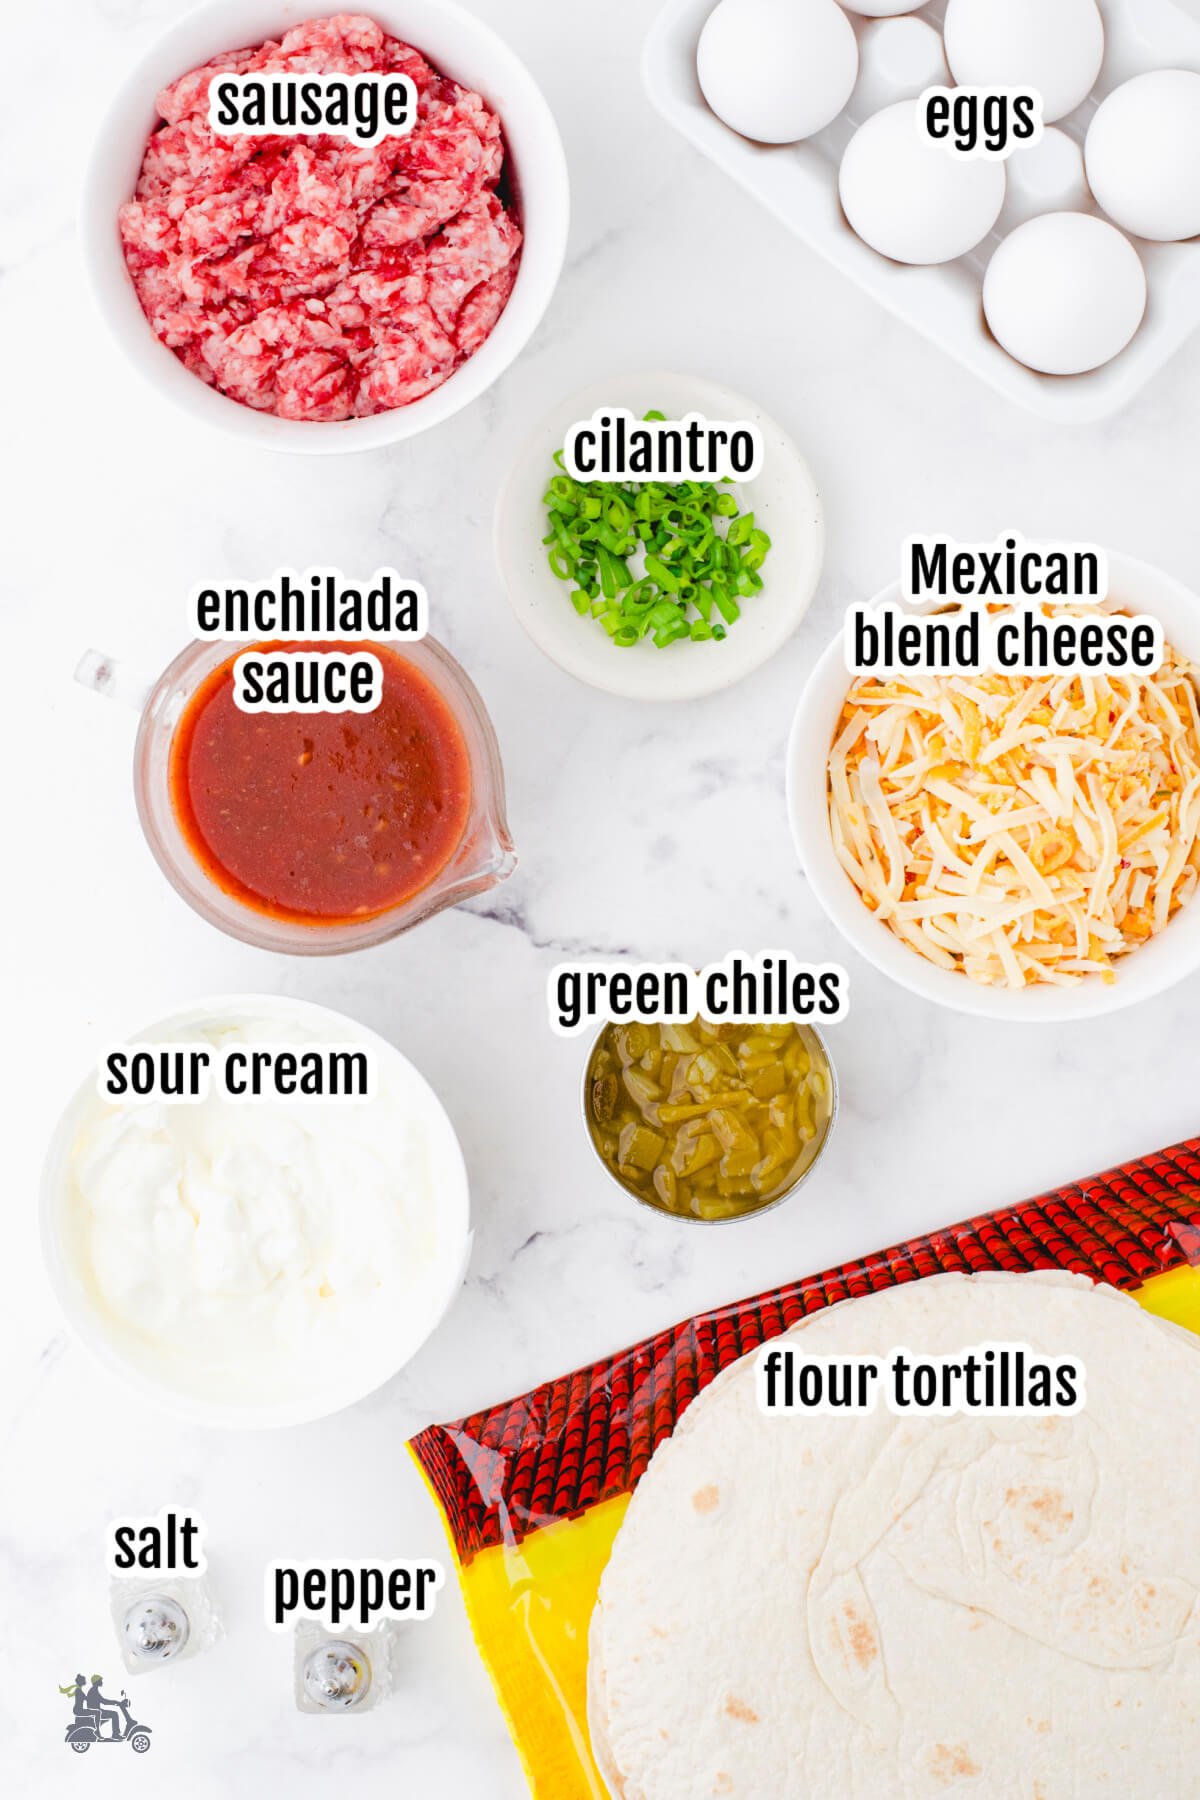 Image of the ingredients needed to make breakfast sausage enchiladas. 